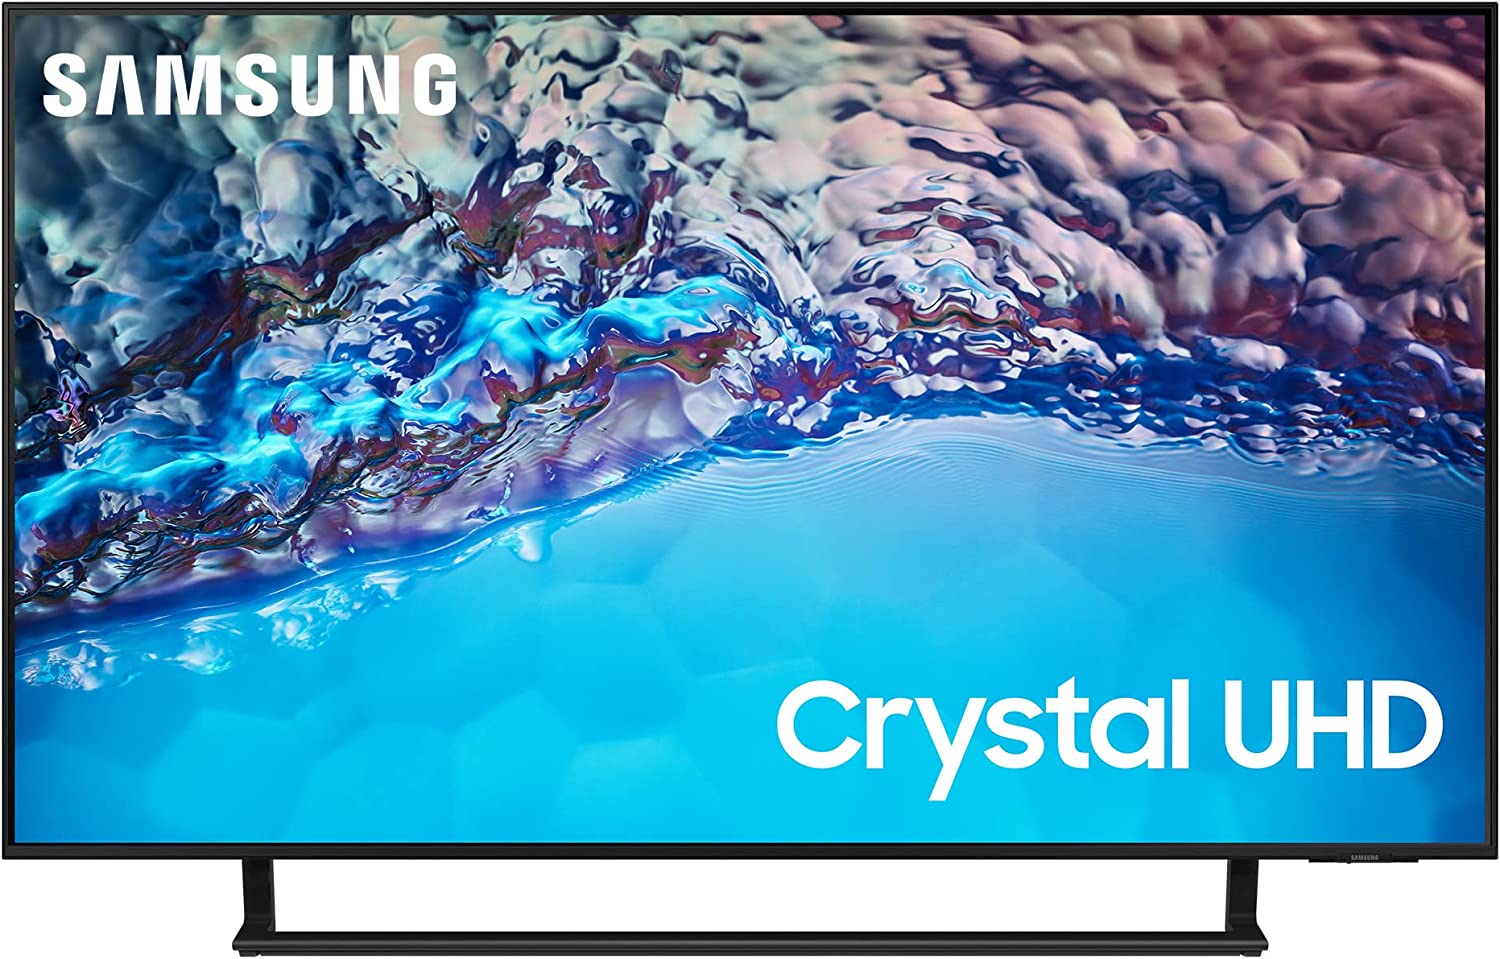 Samsung TV Crystal UHD 43TU7125, Image, Achat, prix, avis